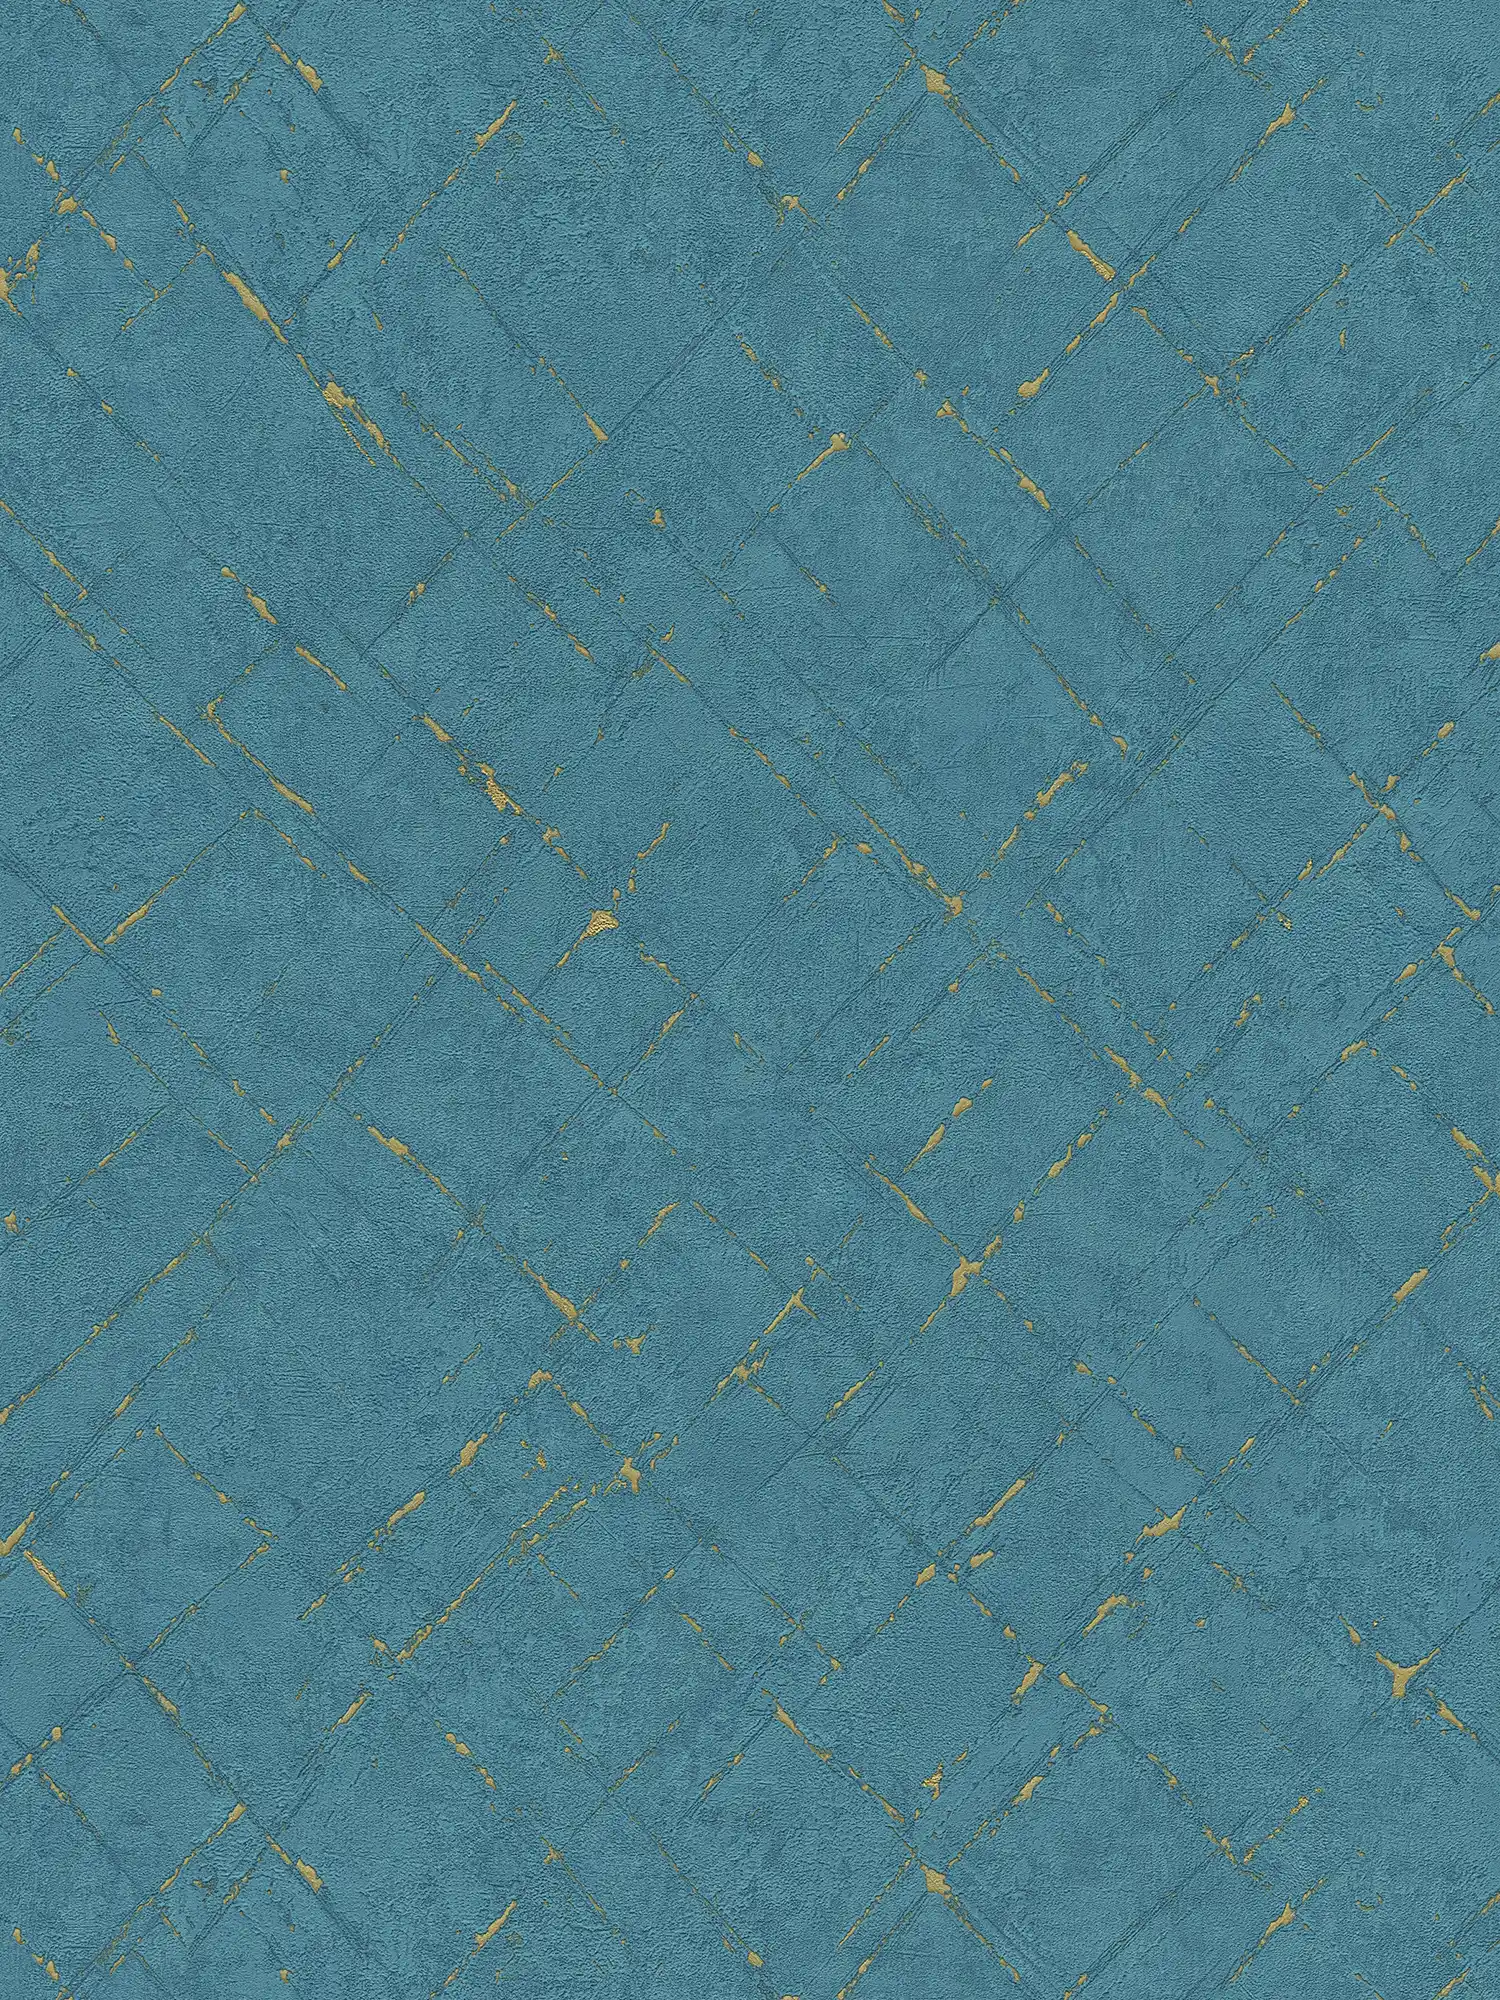 Petrol-kleurig behang, gipslook & metallic effect - blauw, goud
